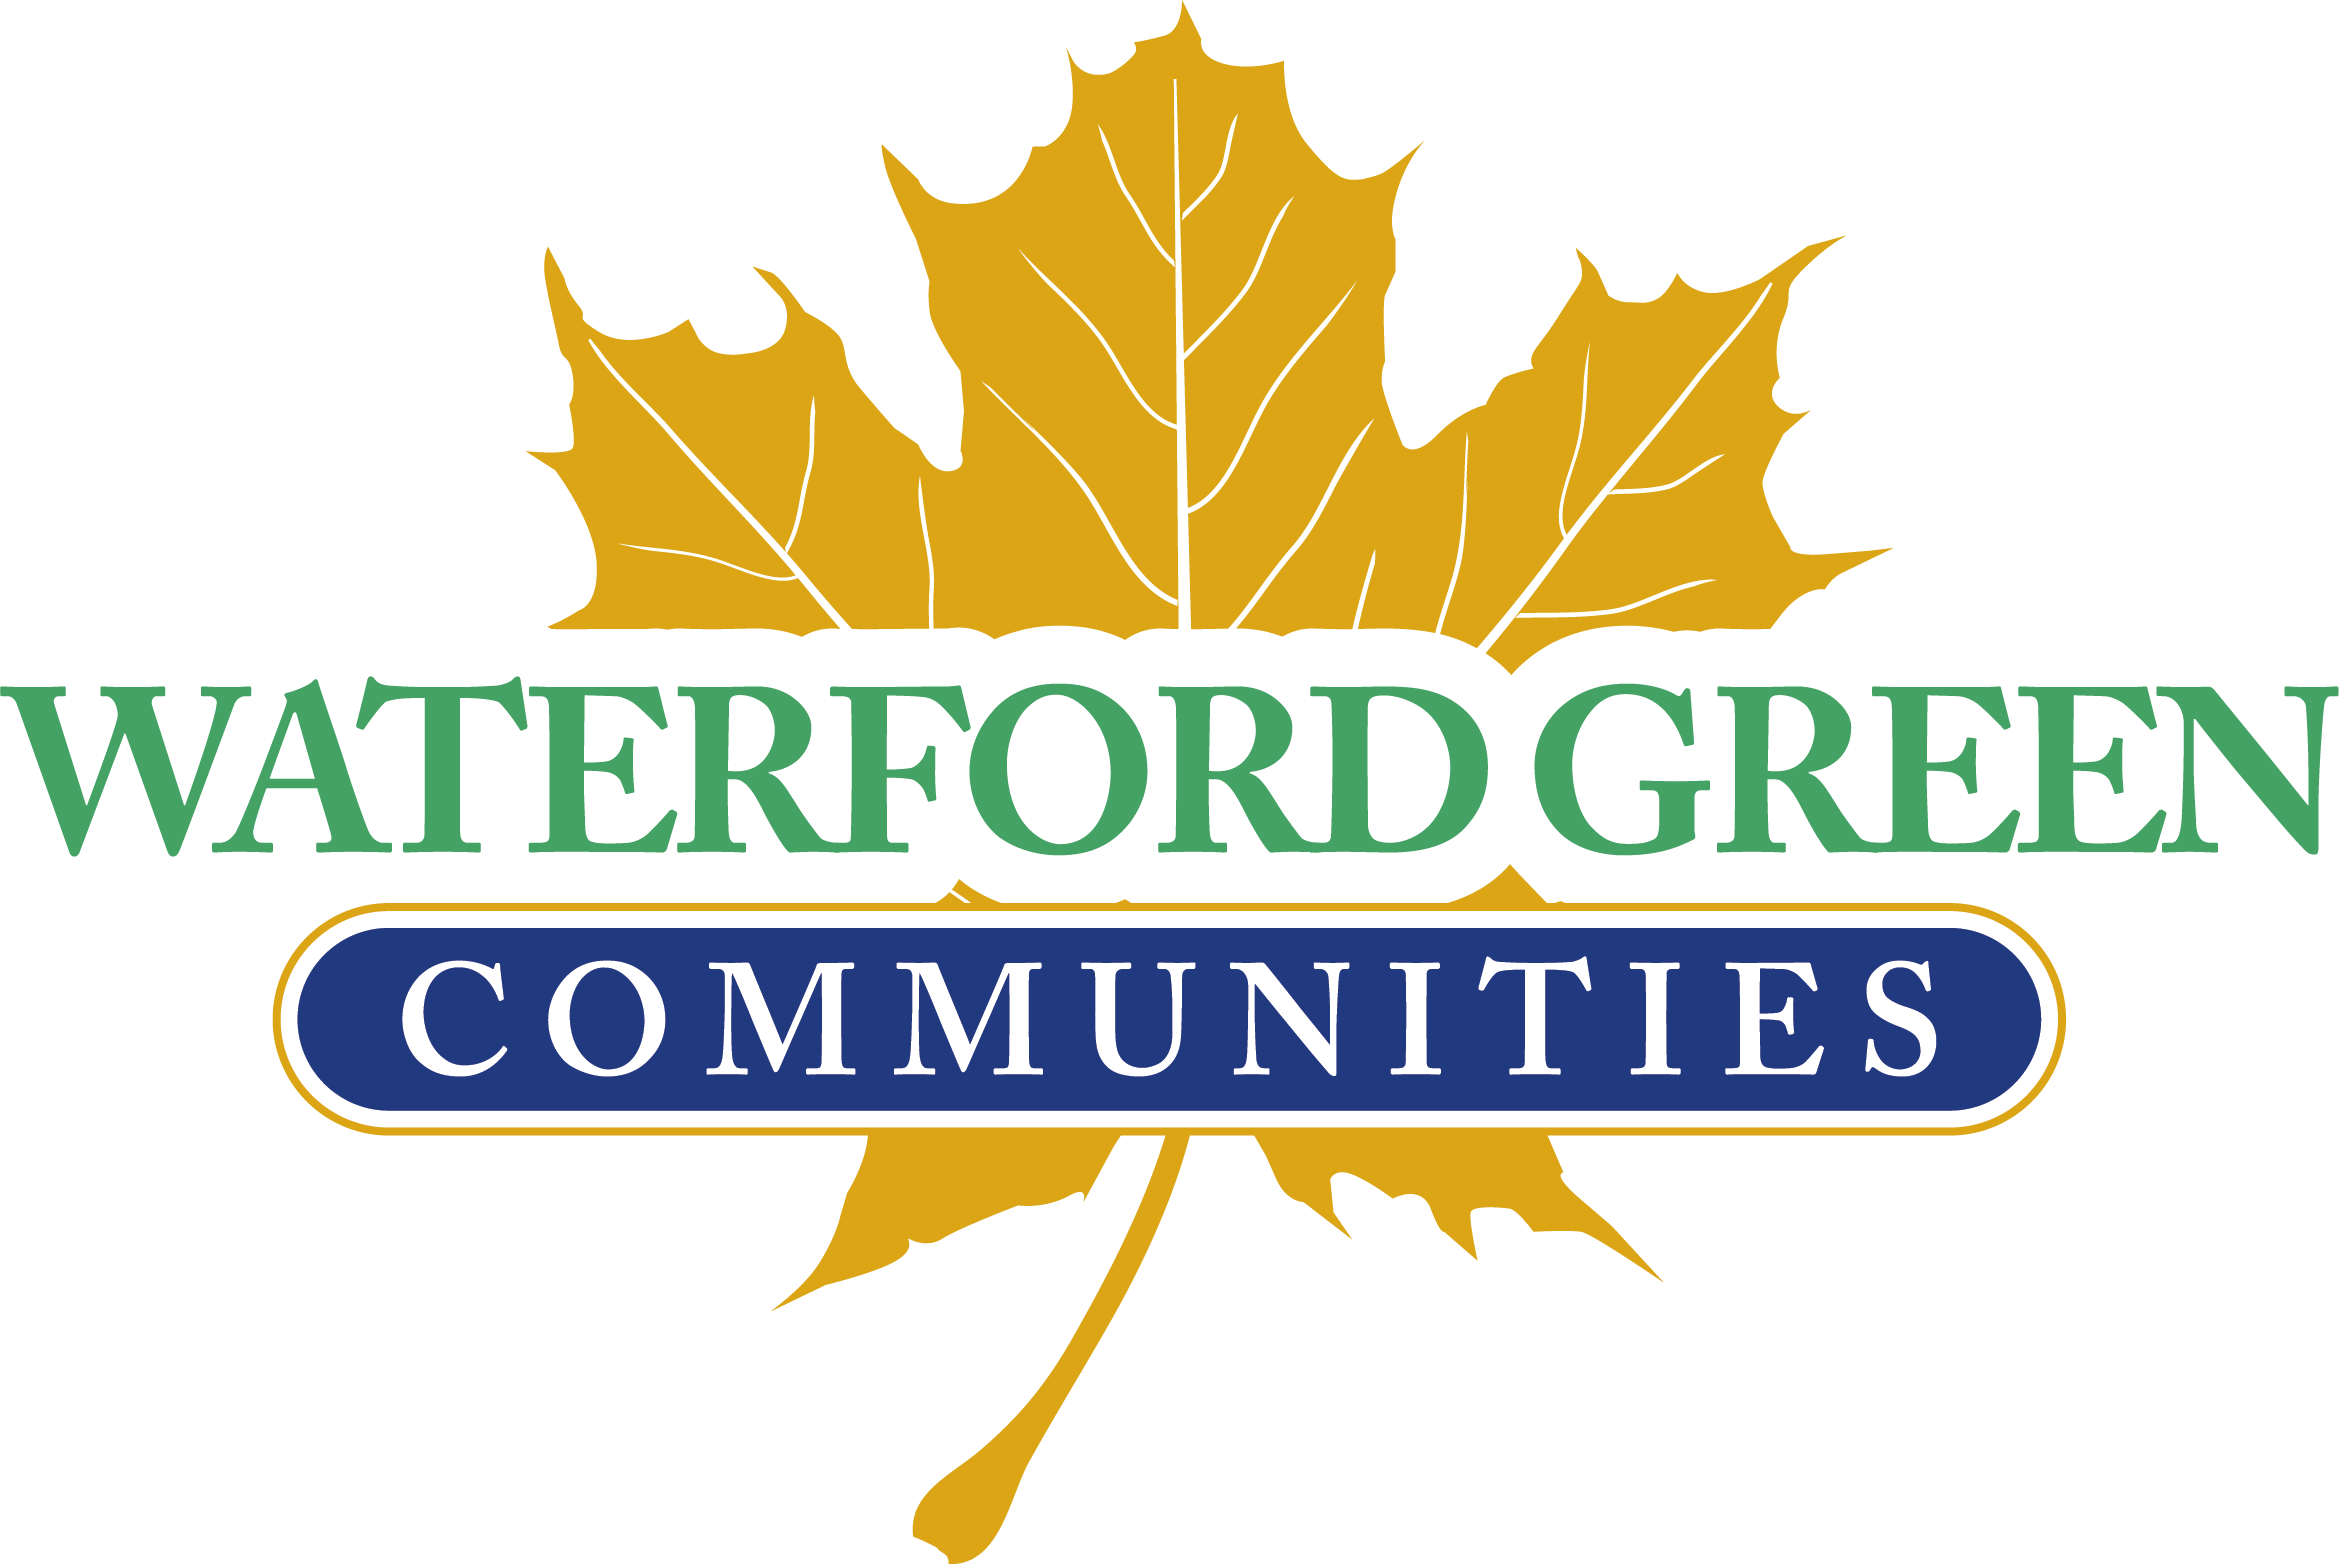 Green Builder Logo - New Home Builder Raleigh NC. Waterford Green Communities